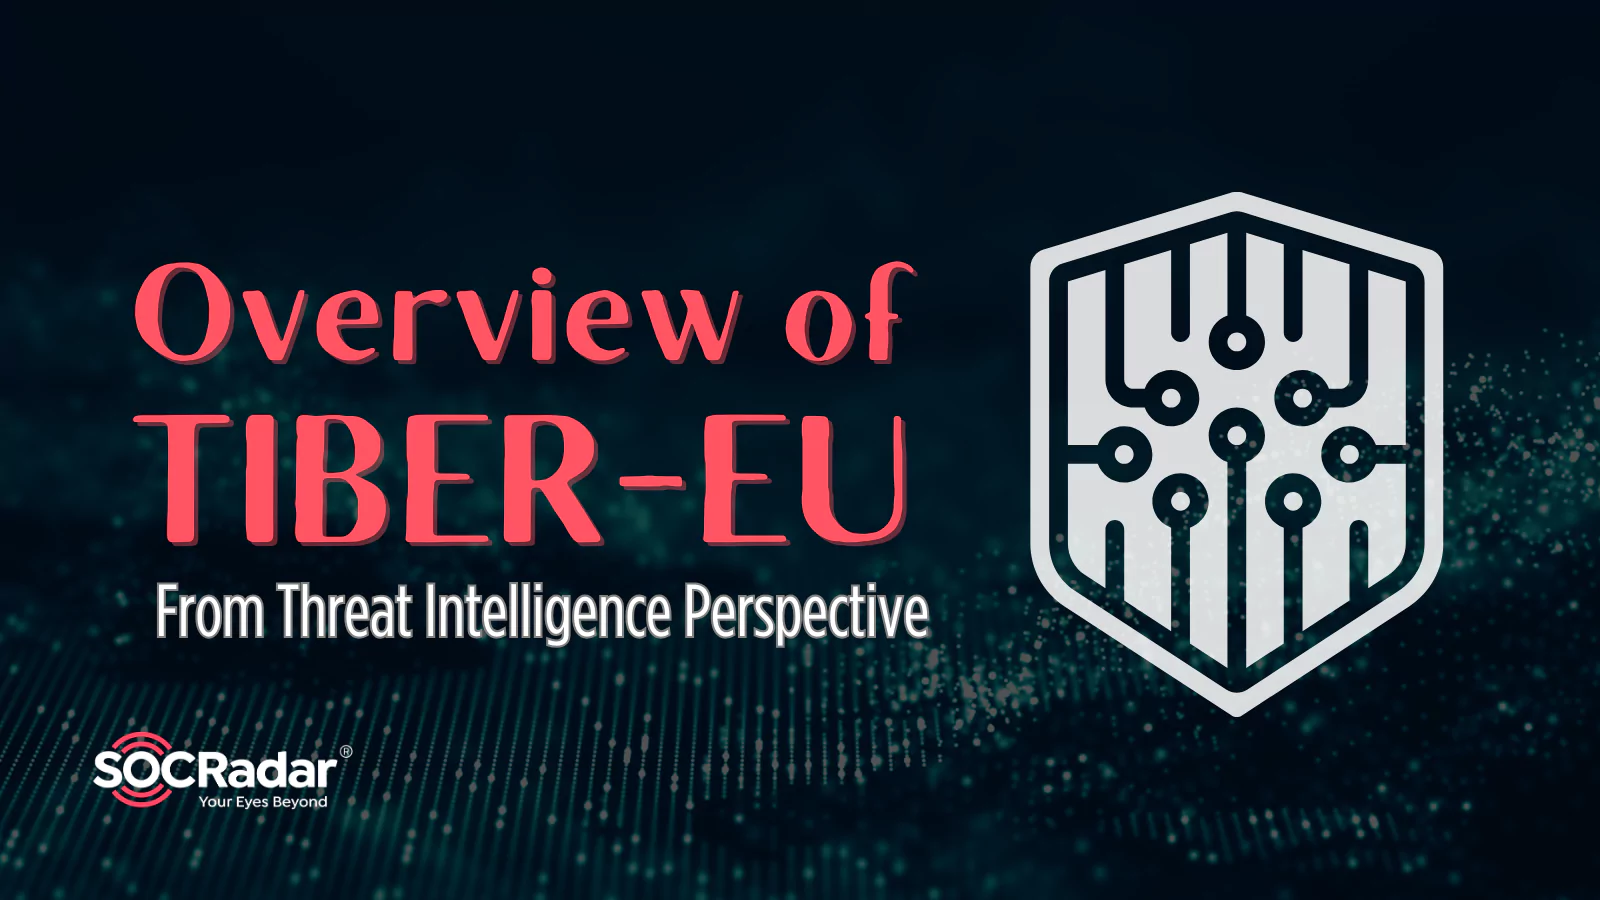 SOCRadar® Cyber Intelligence Inc. | Overview of TIBER-EU From Threat Intelligence Perspective